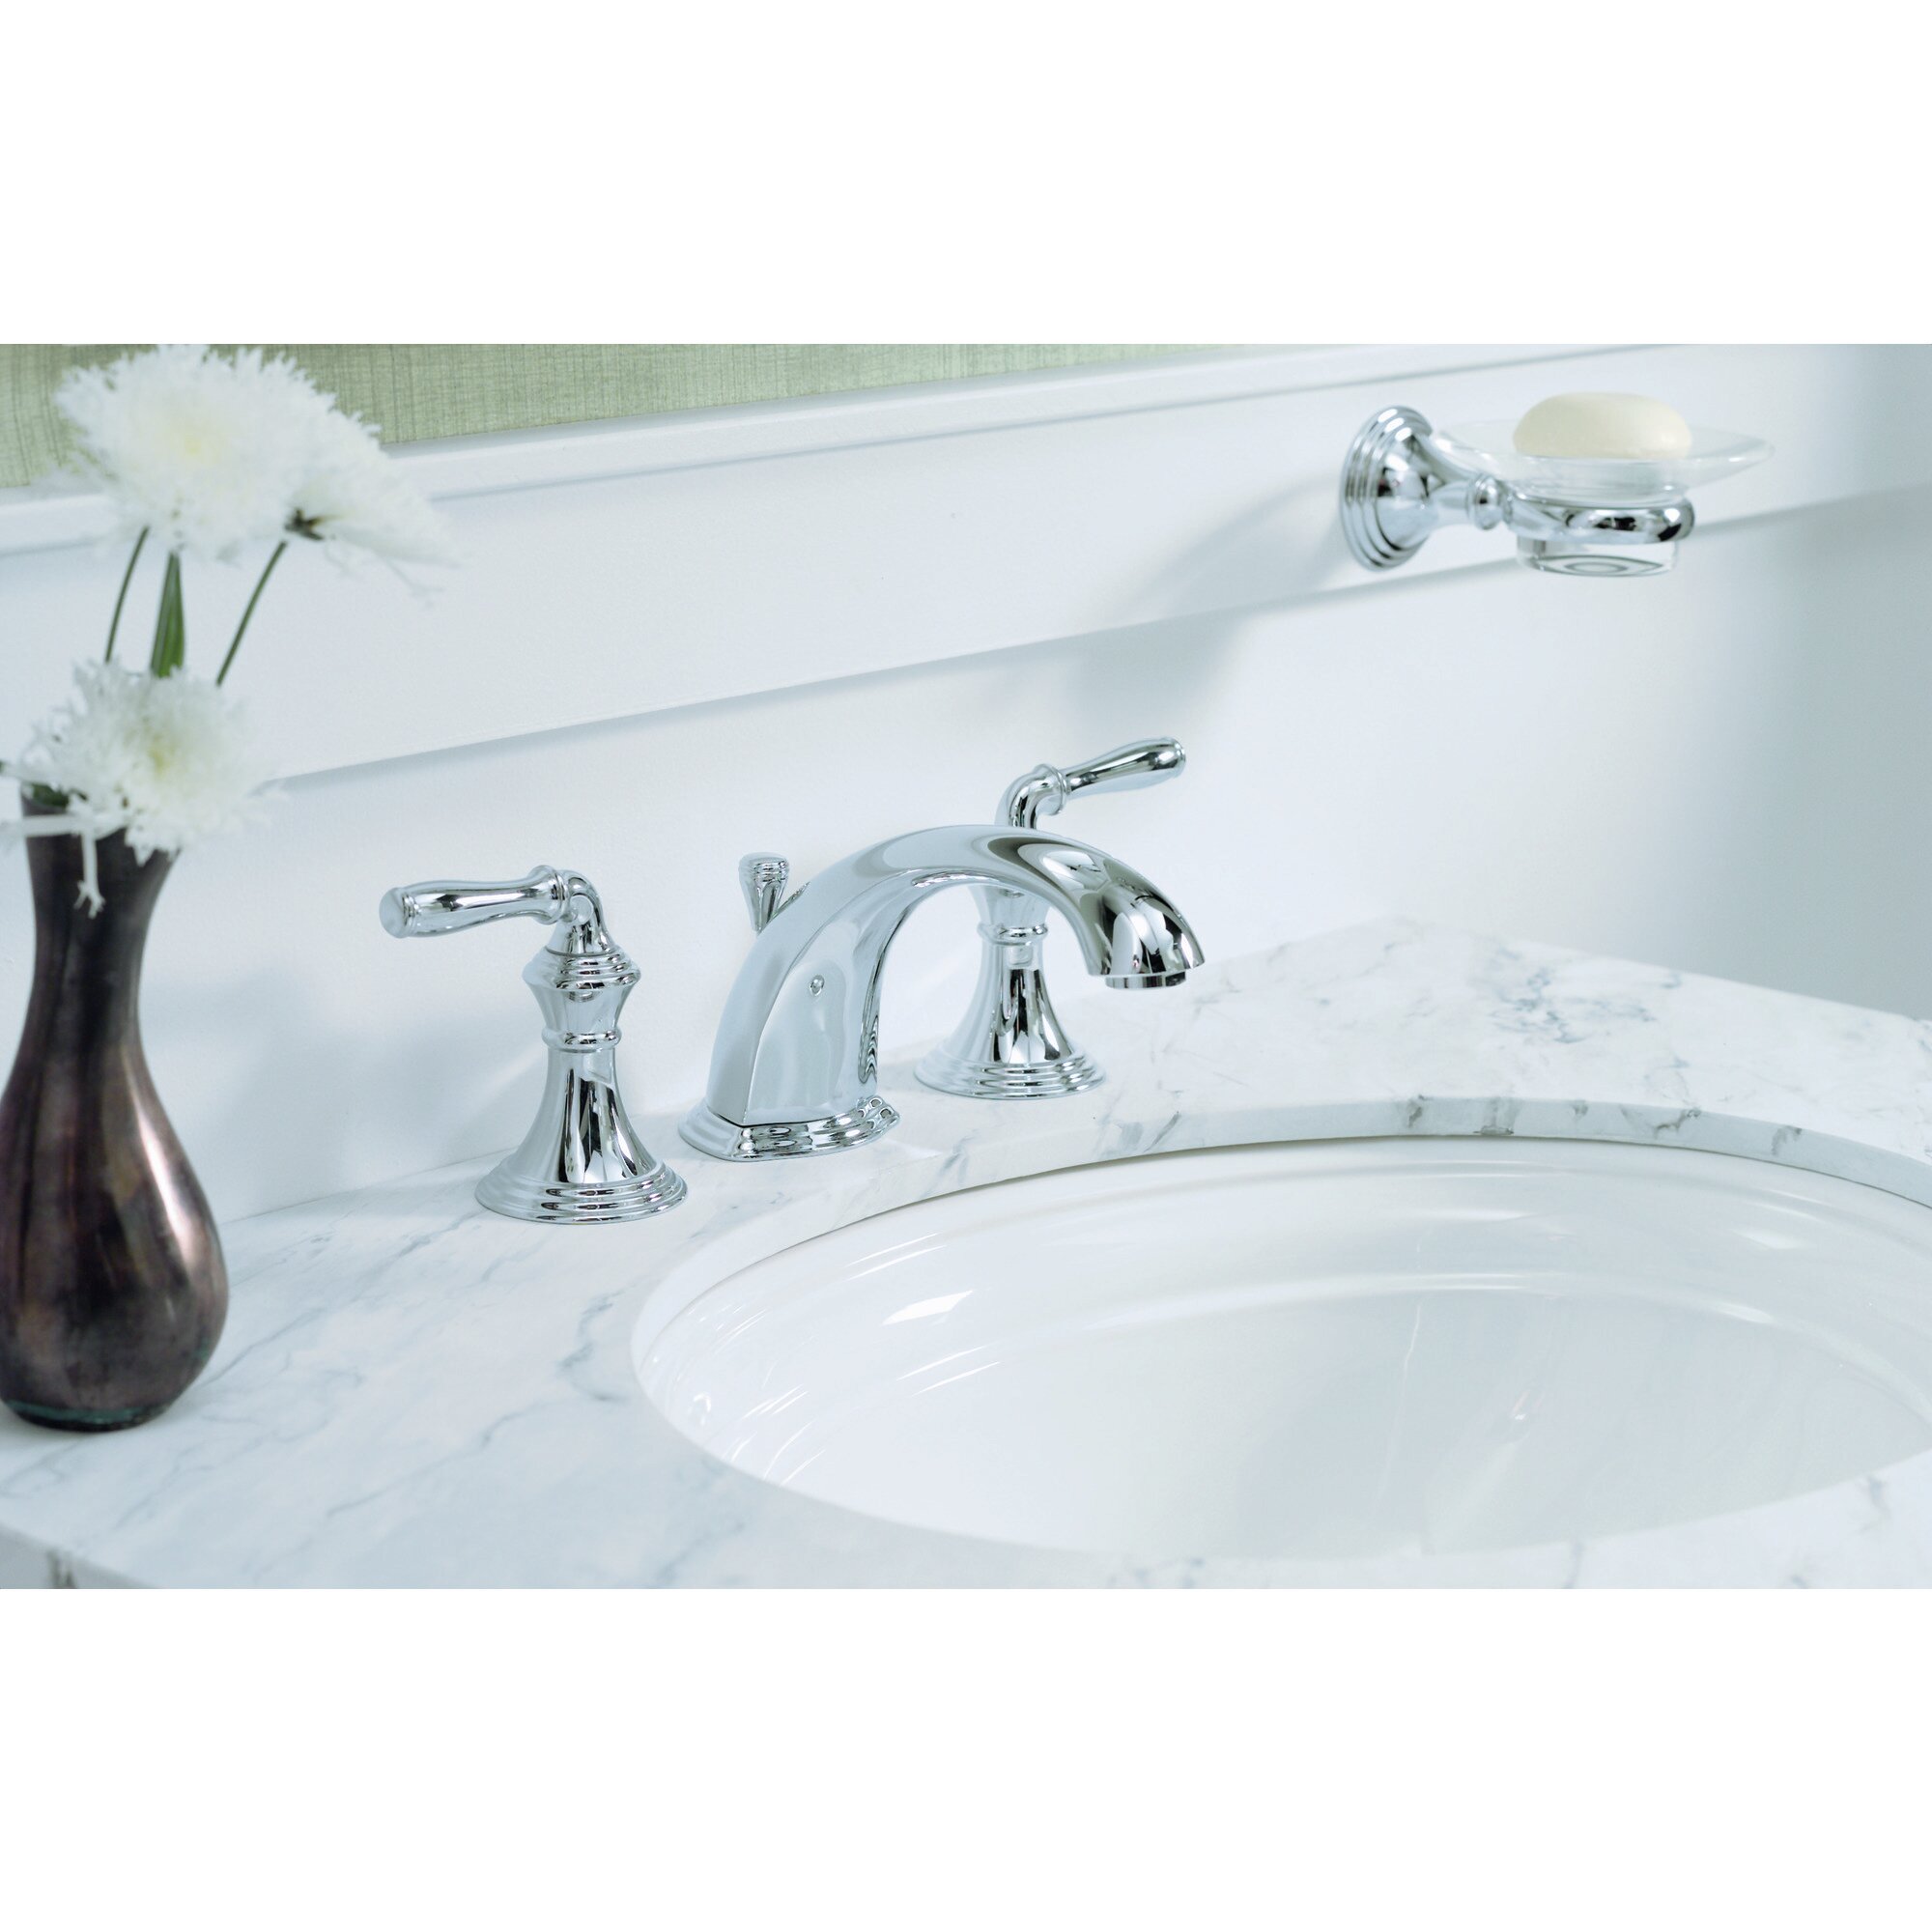 K 394 4 Cp Bn Pb Kohler Devonshire Widespread Bathroom Faucet With